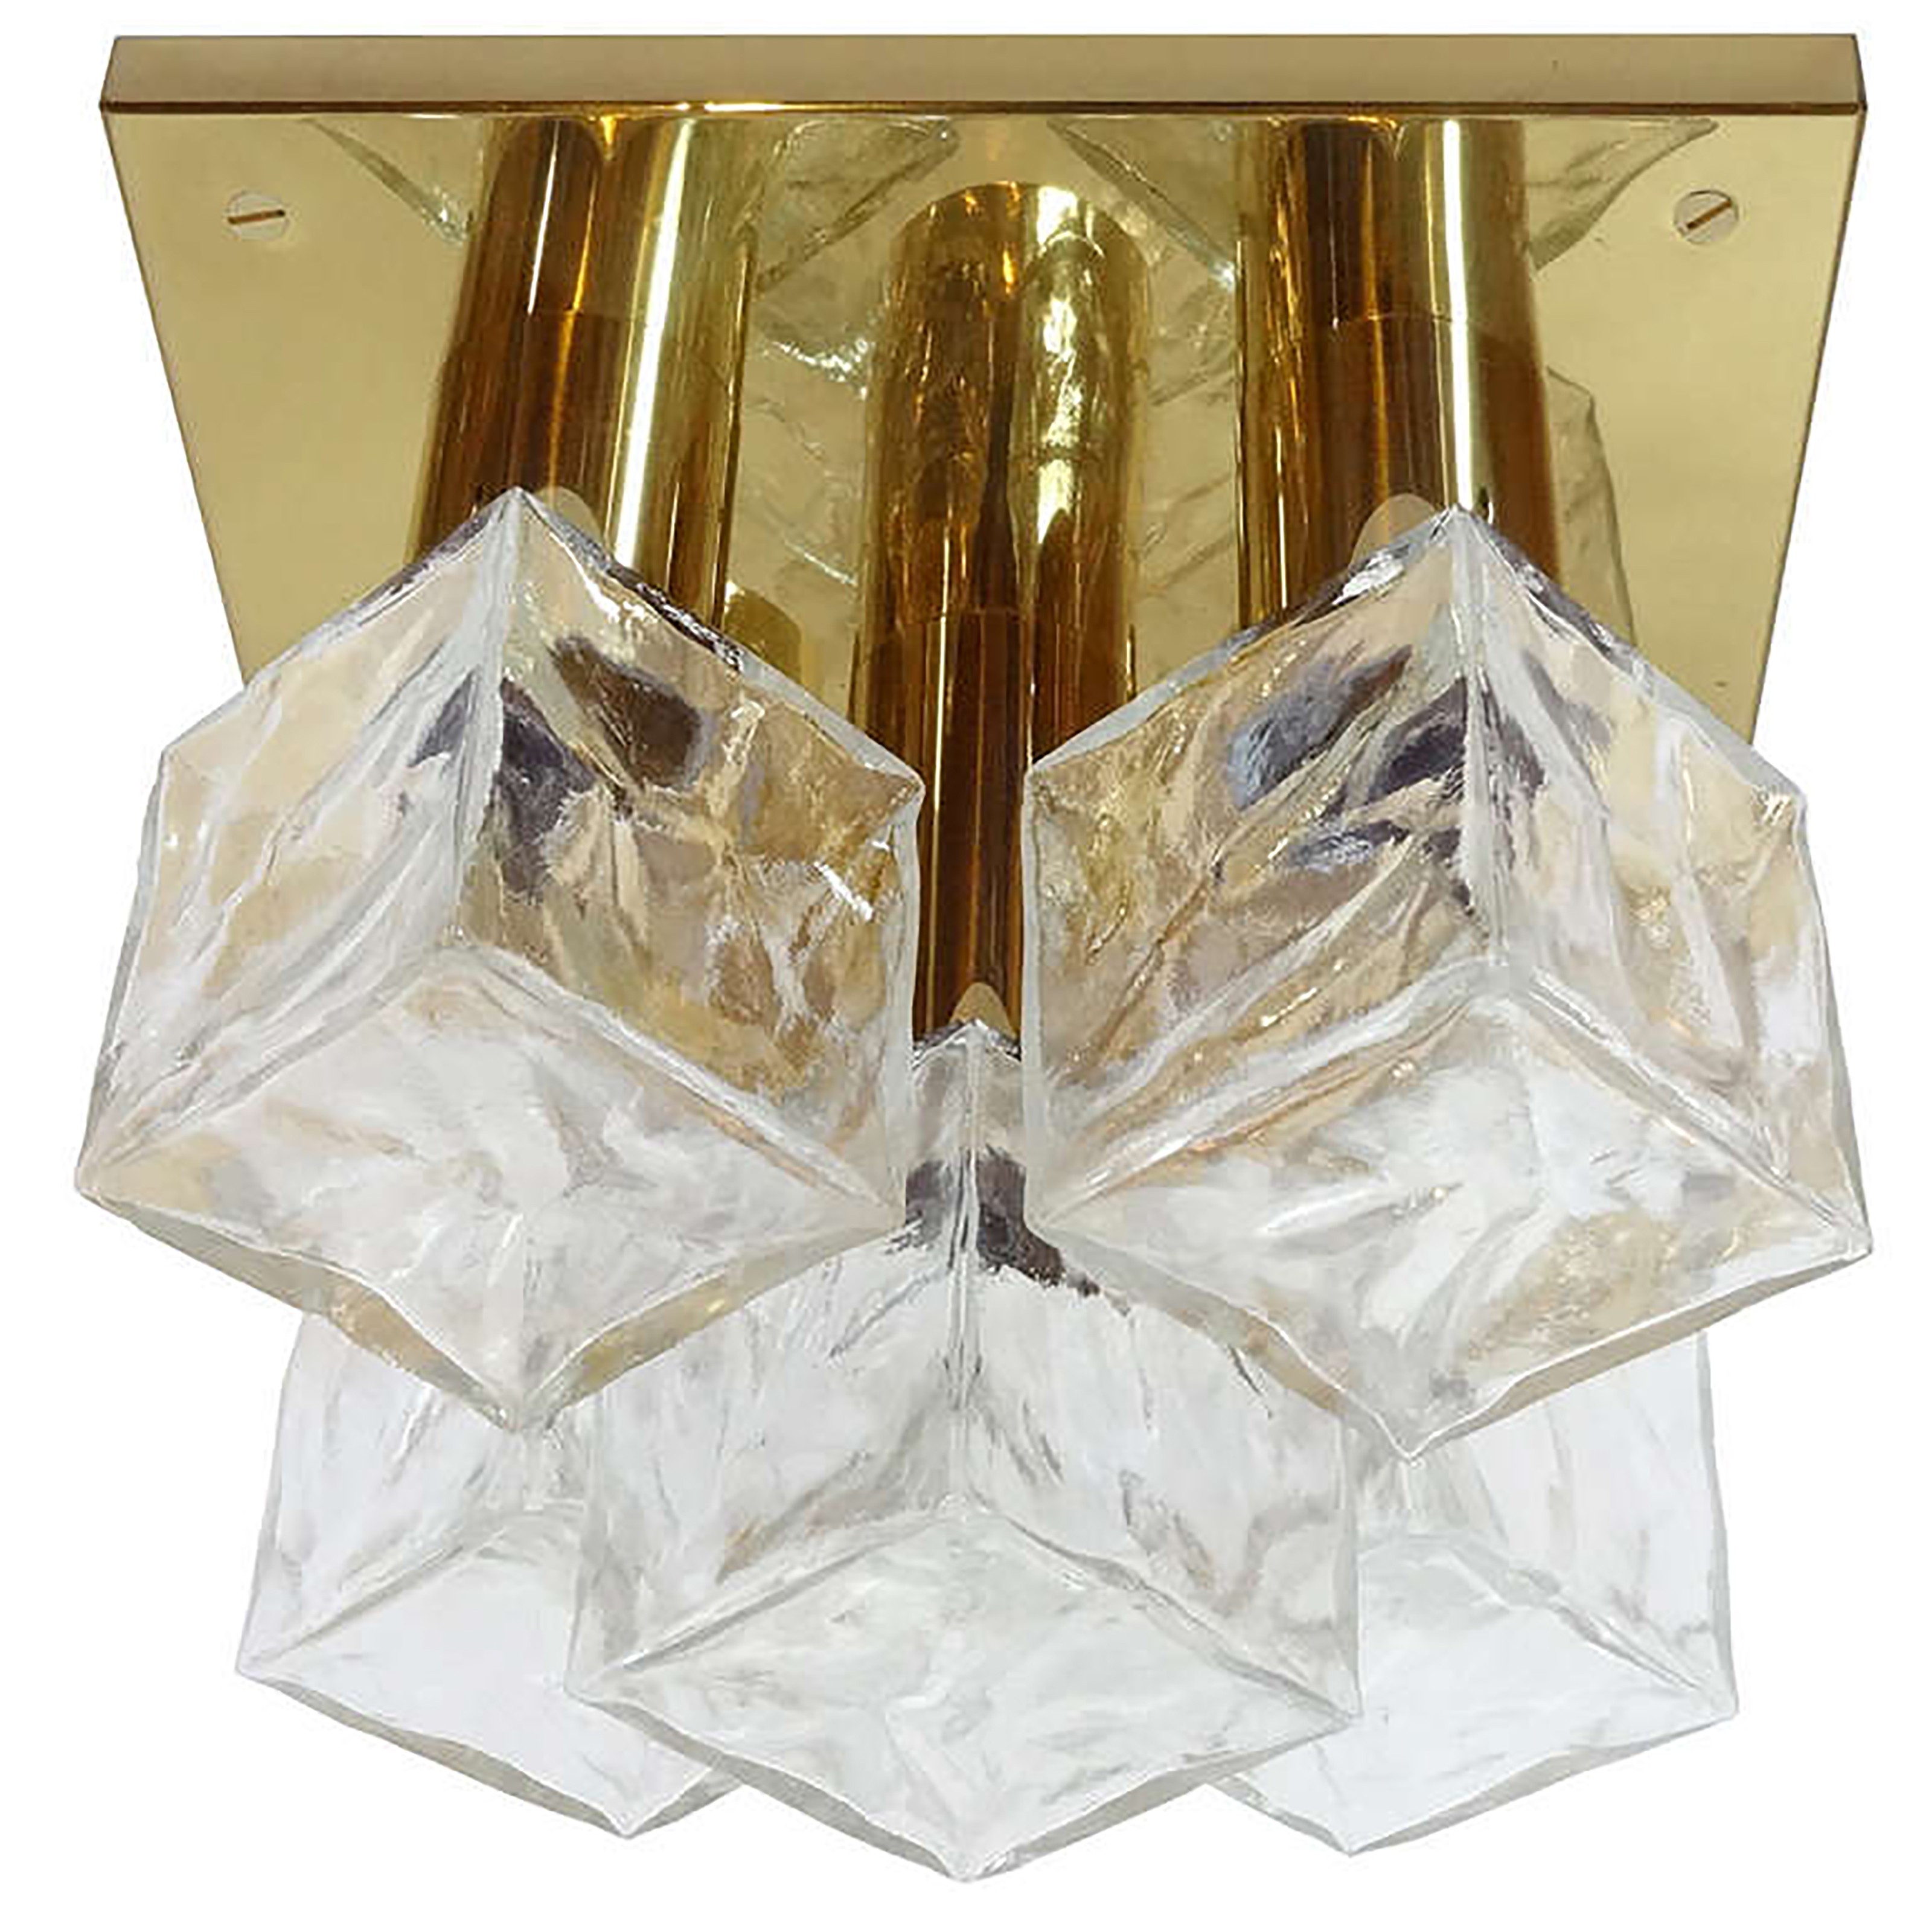 J.T. Kalmar Brass and Glass Ceiling Fixture